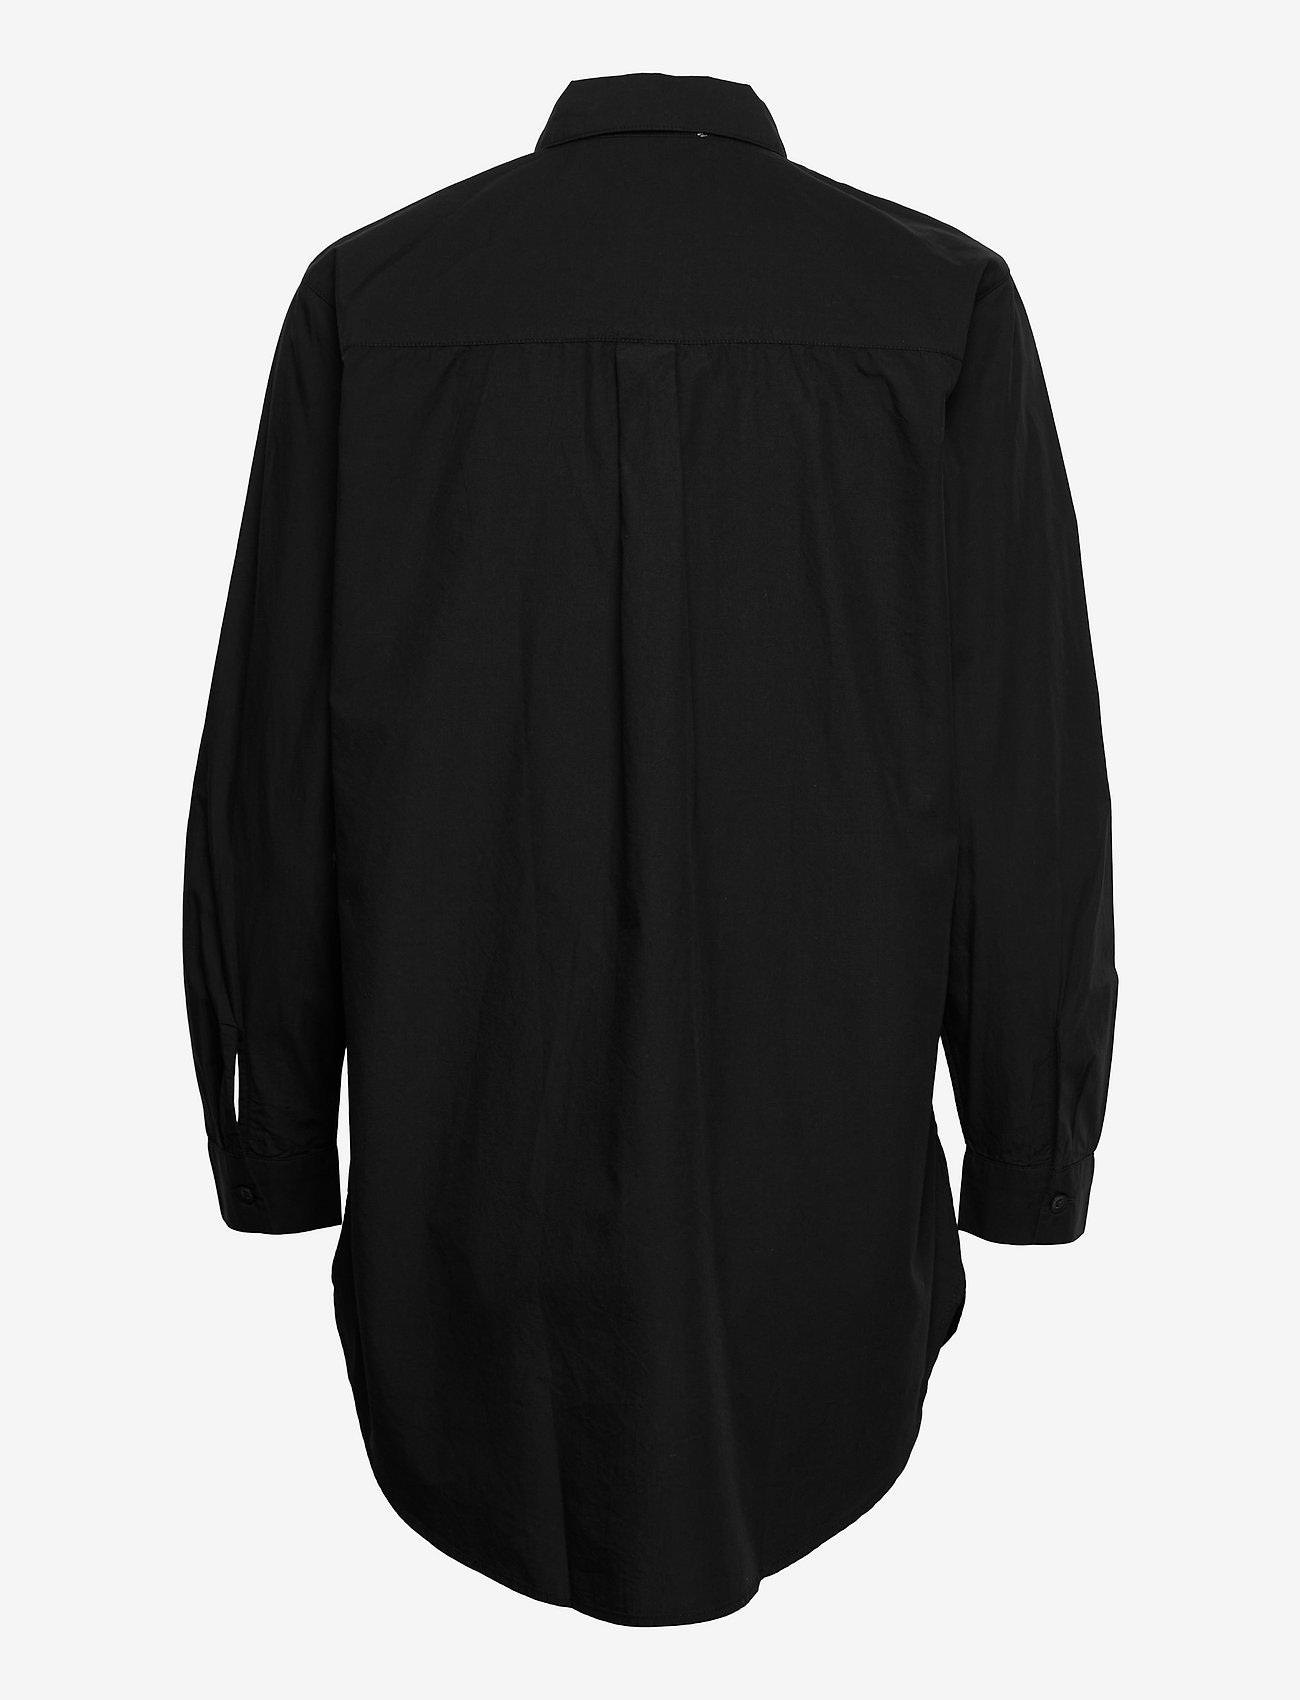 Esprit Casual - Long blouse made of 100% organic cotton - pitkähihaiset paidat - black - 1